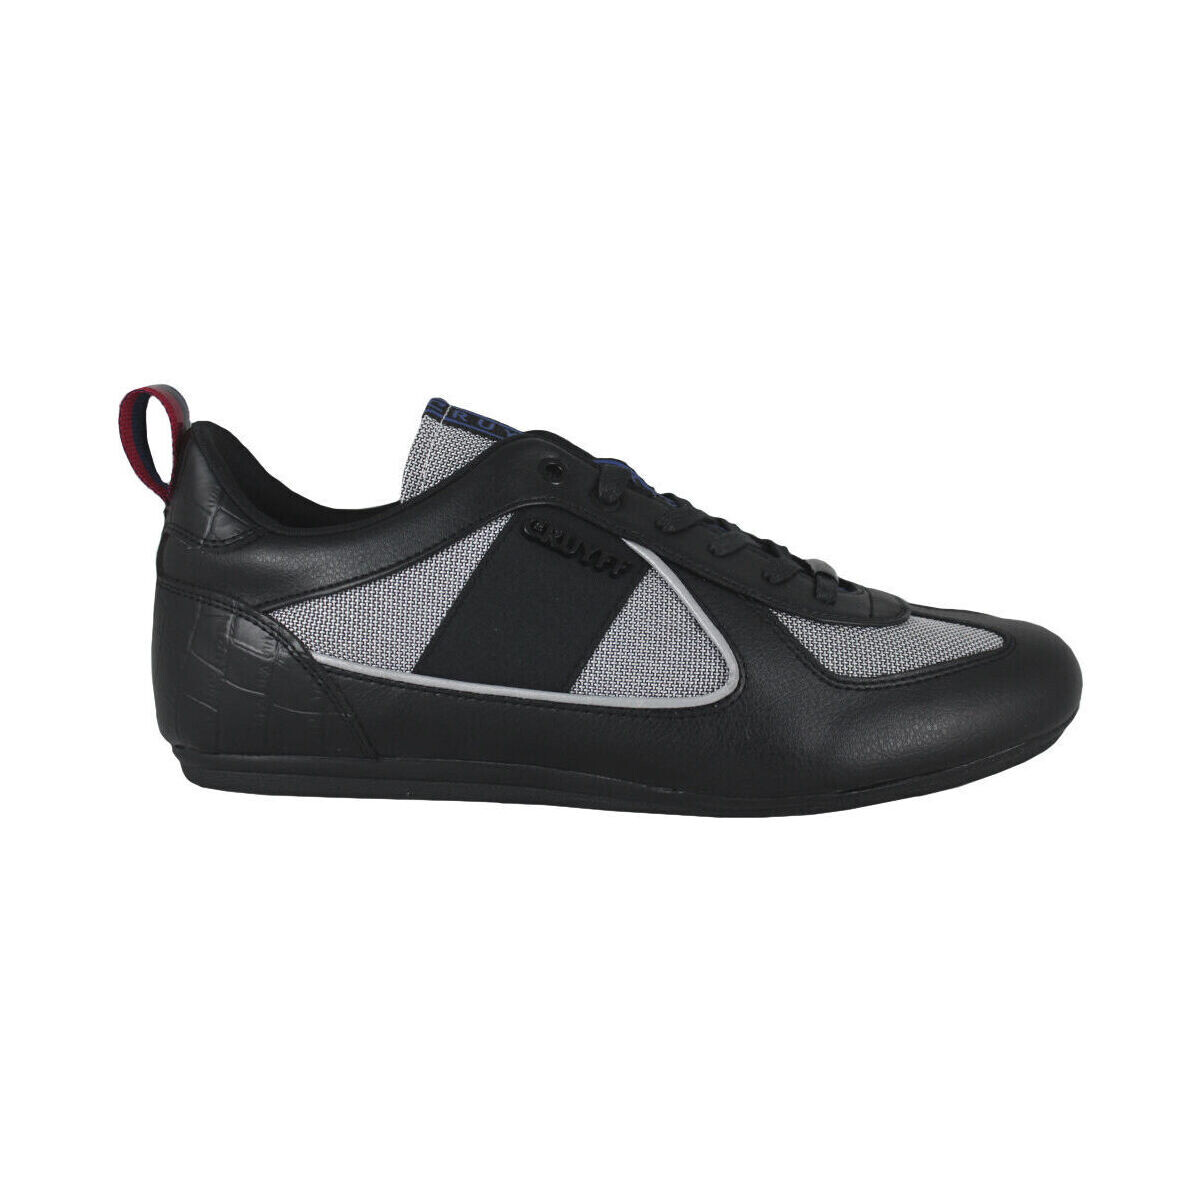 Chaussures Homme Baskets mode Cruyff Nite crawler CC7770201 490 Black/Black Noir